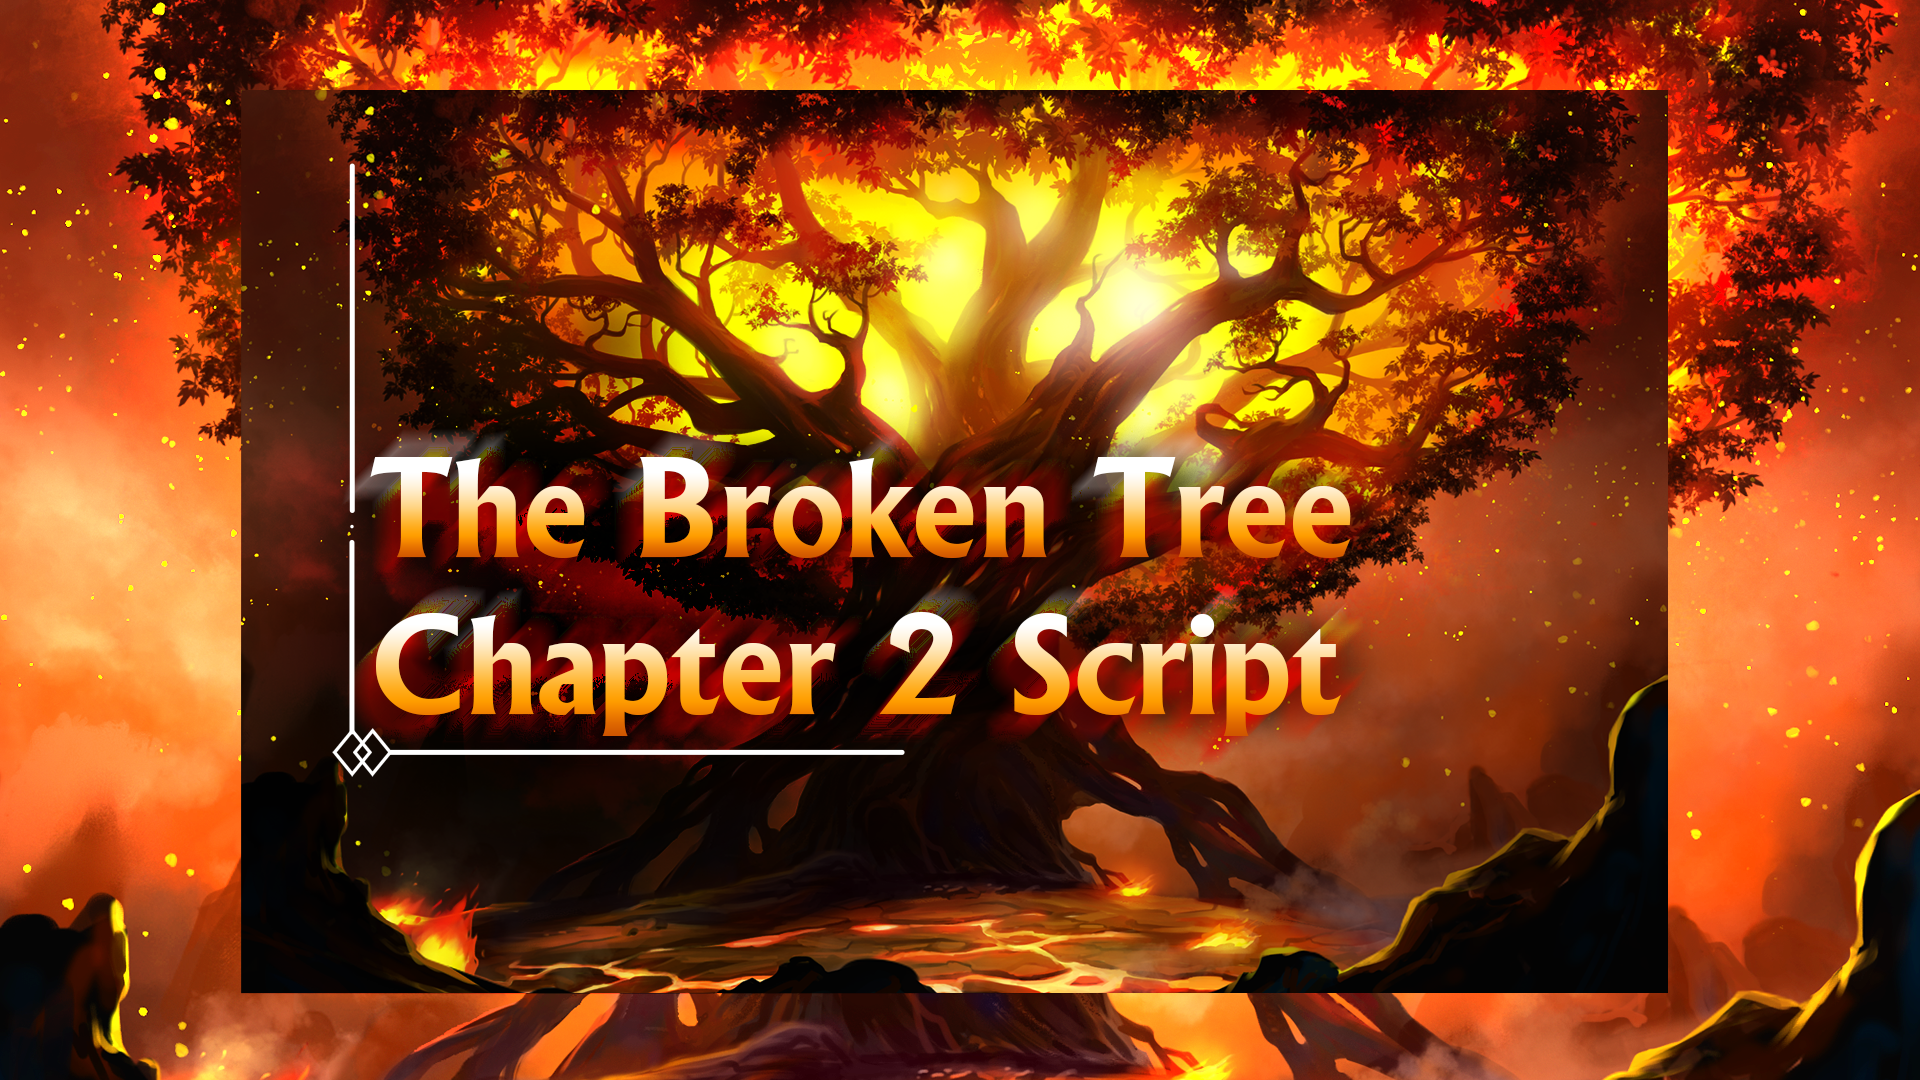 Broken Tree Chapter 2 Story Script